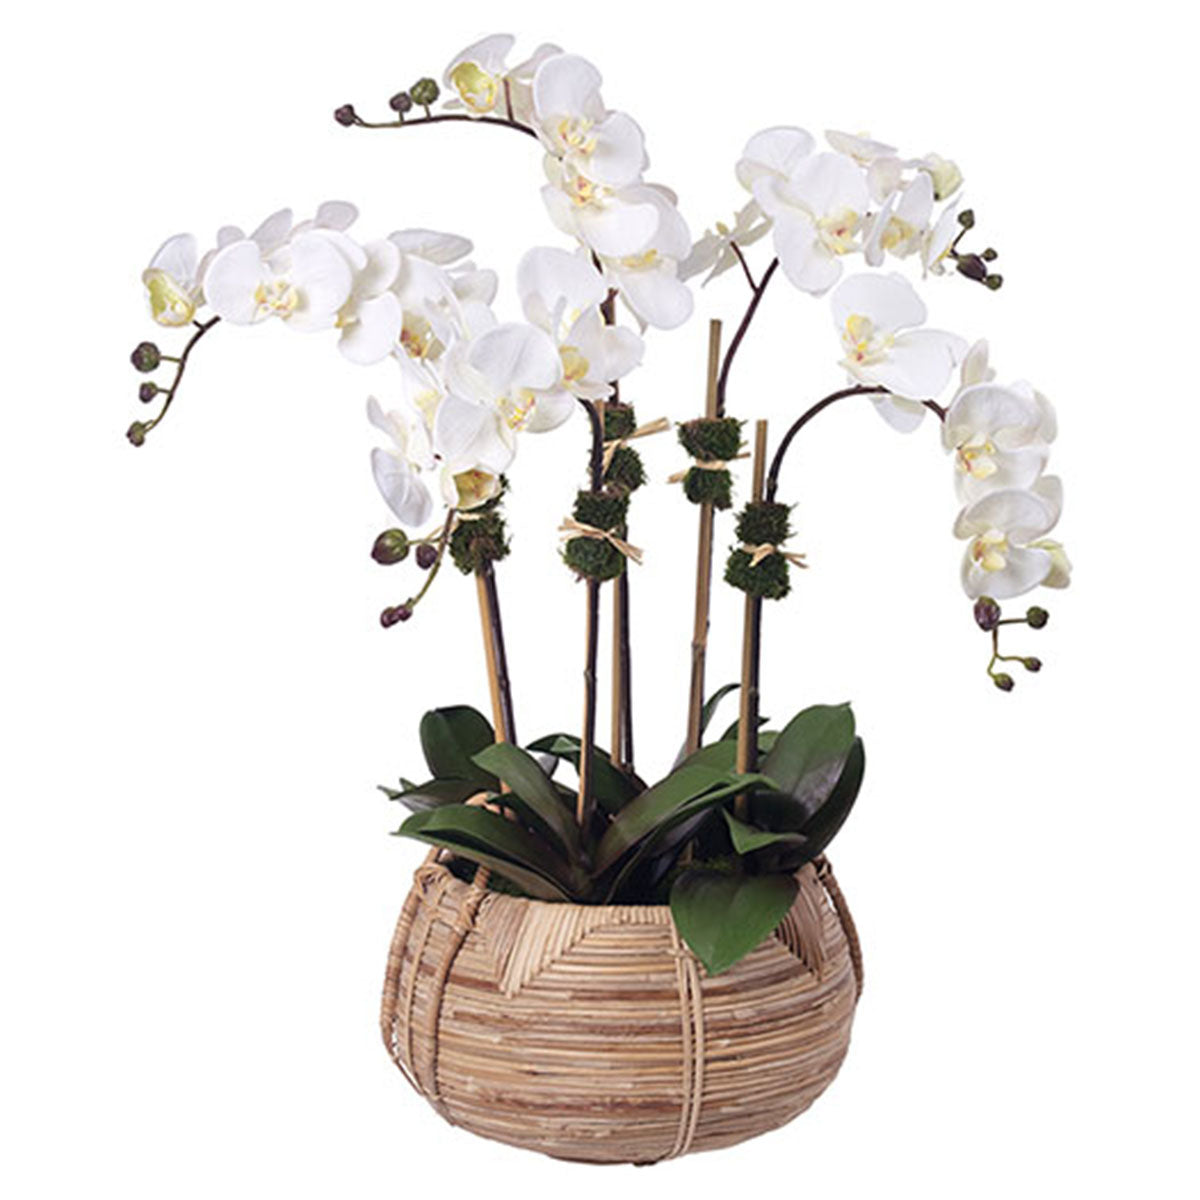 Diane James Cream Phalaenopsis Orchids in Cane Basket